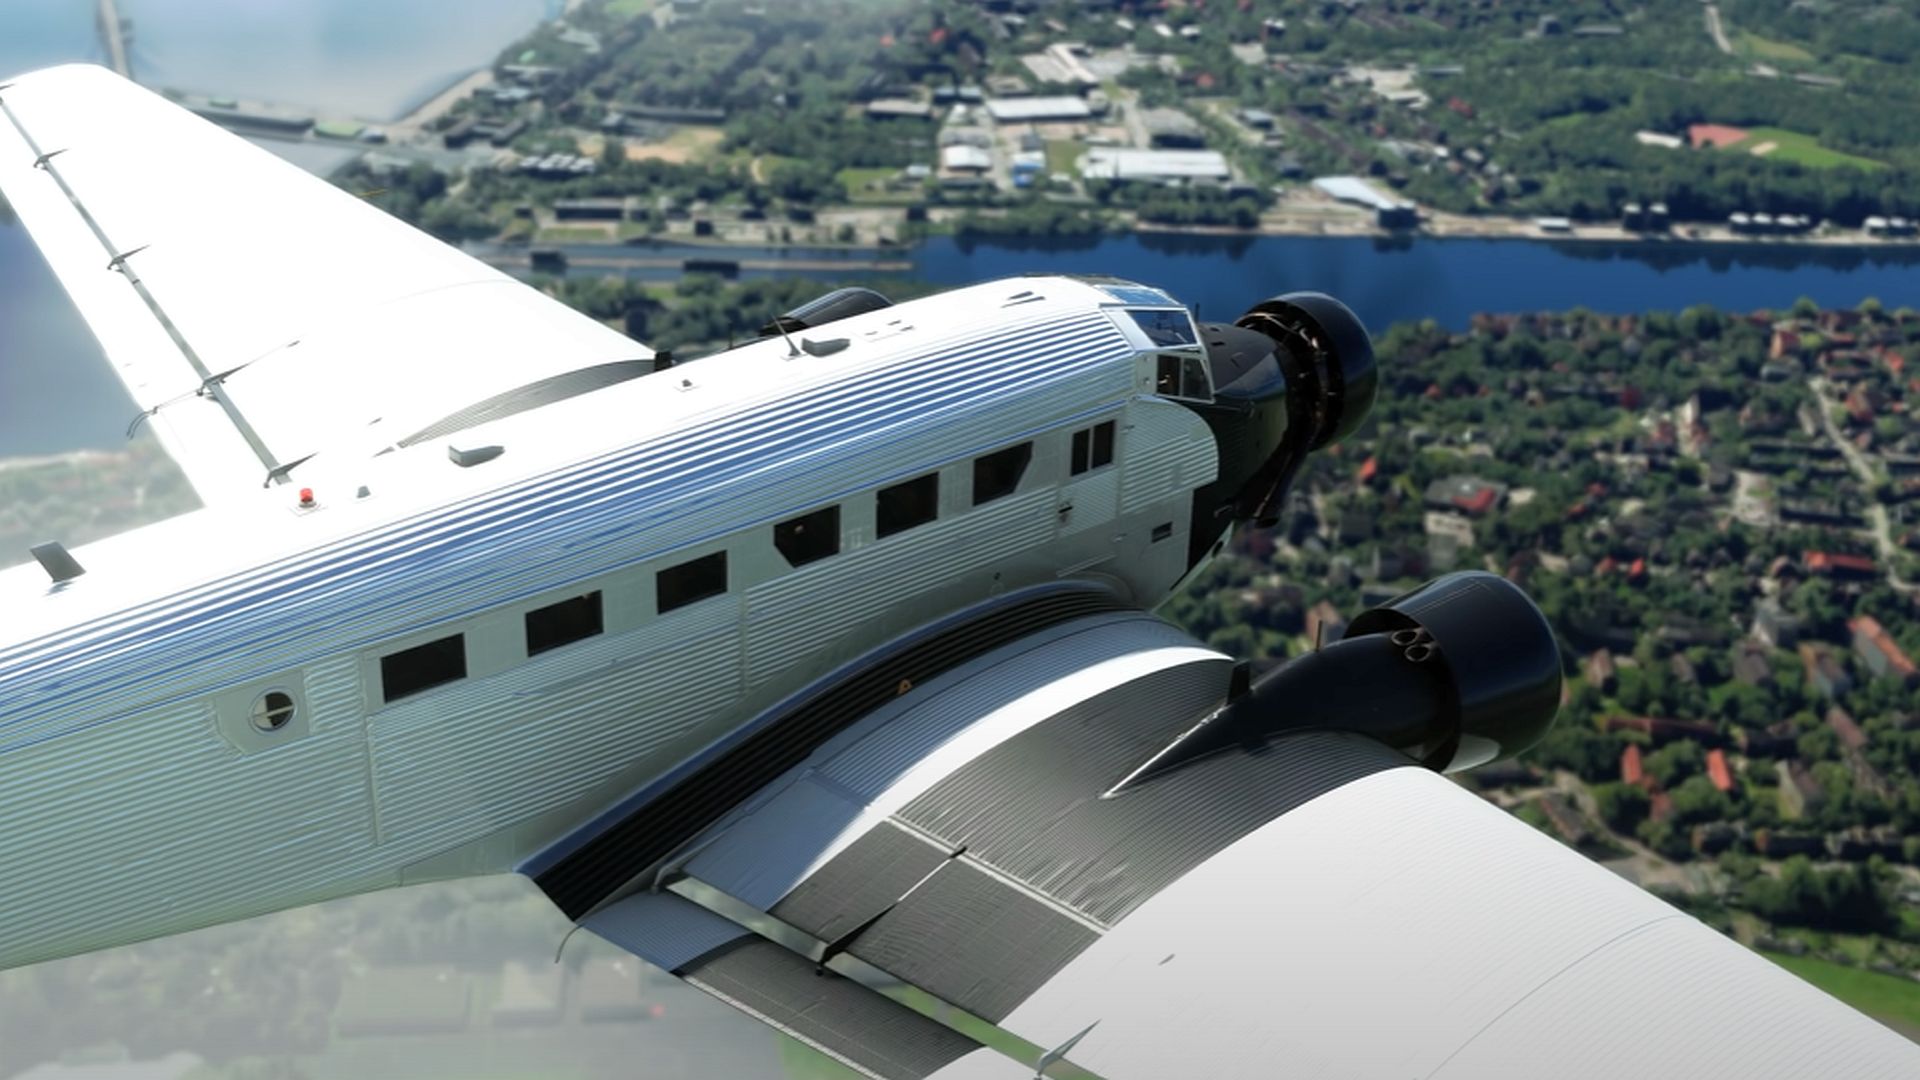 Microsoft Flight Simulator gets its first 'Local Legends' plane – the Junkers JU-52